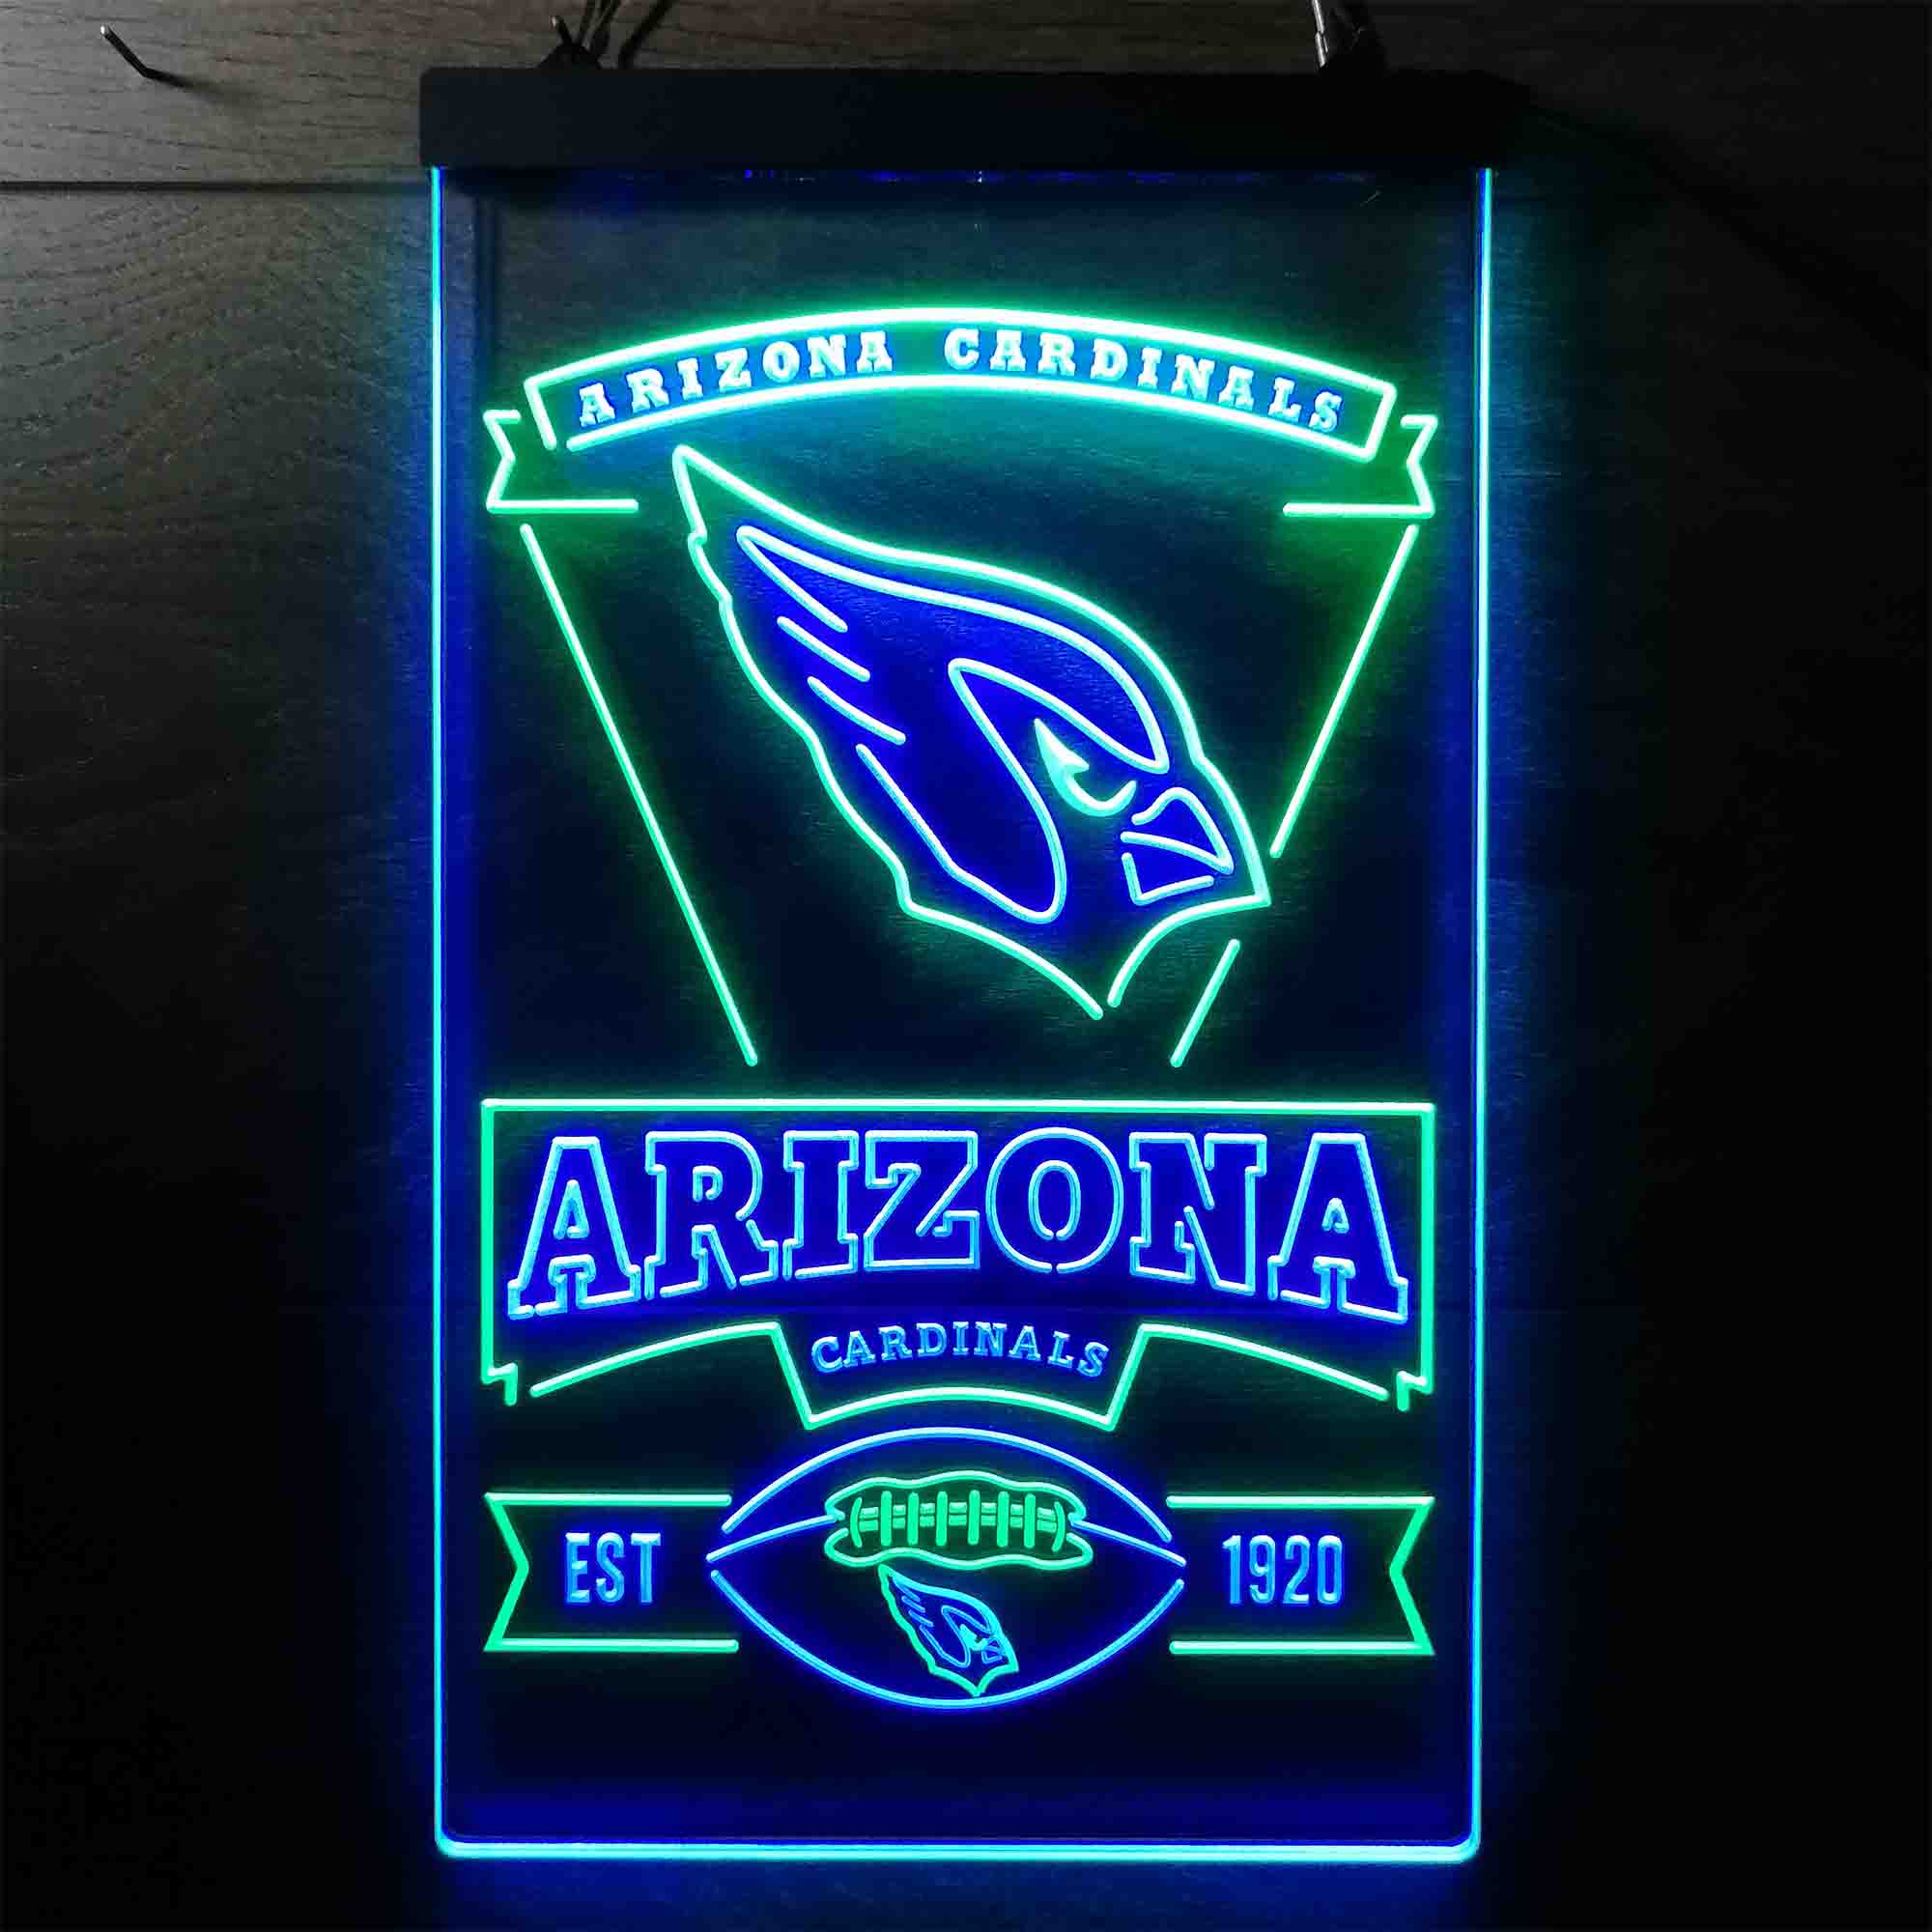 Arizona Cardinals Est. 1920 Neon-Like LED Sign